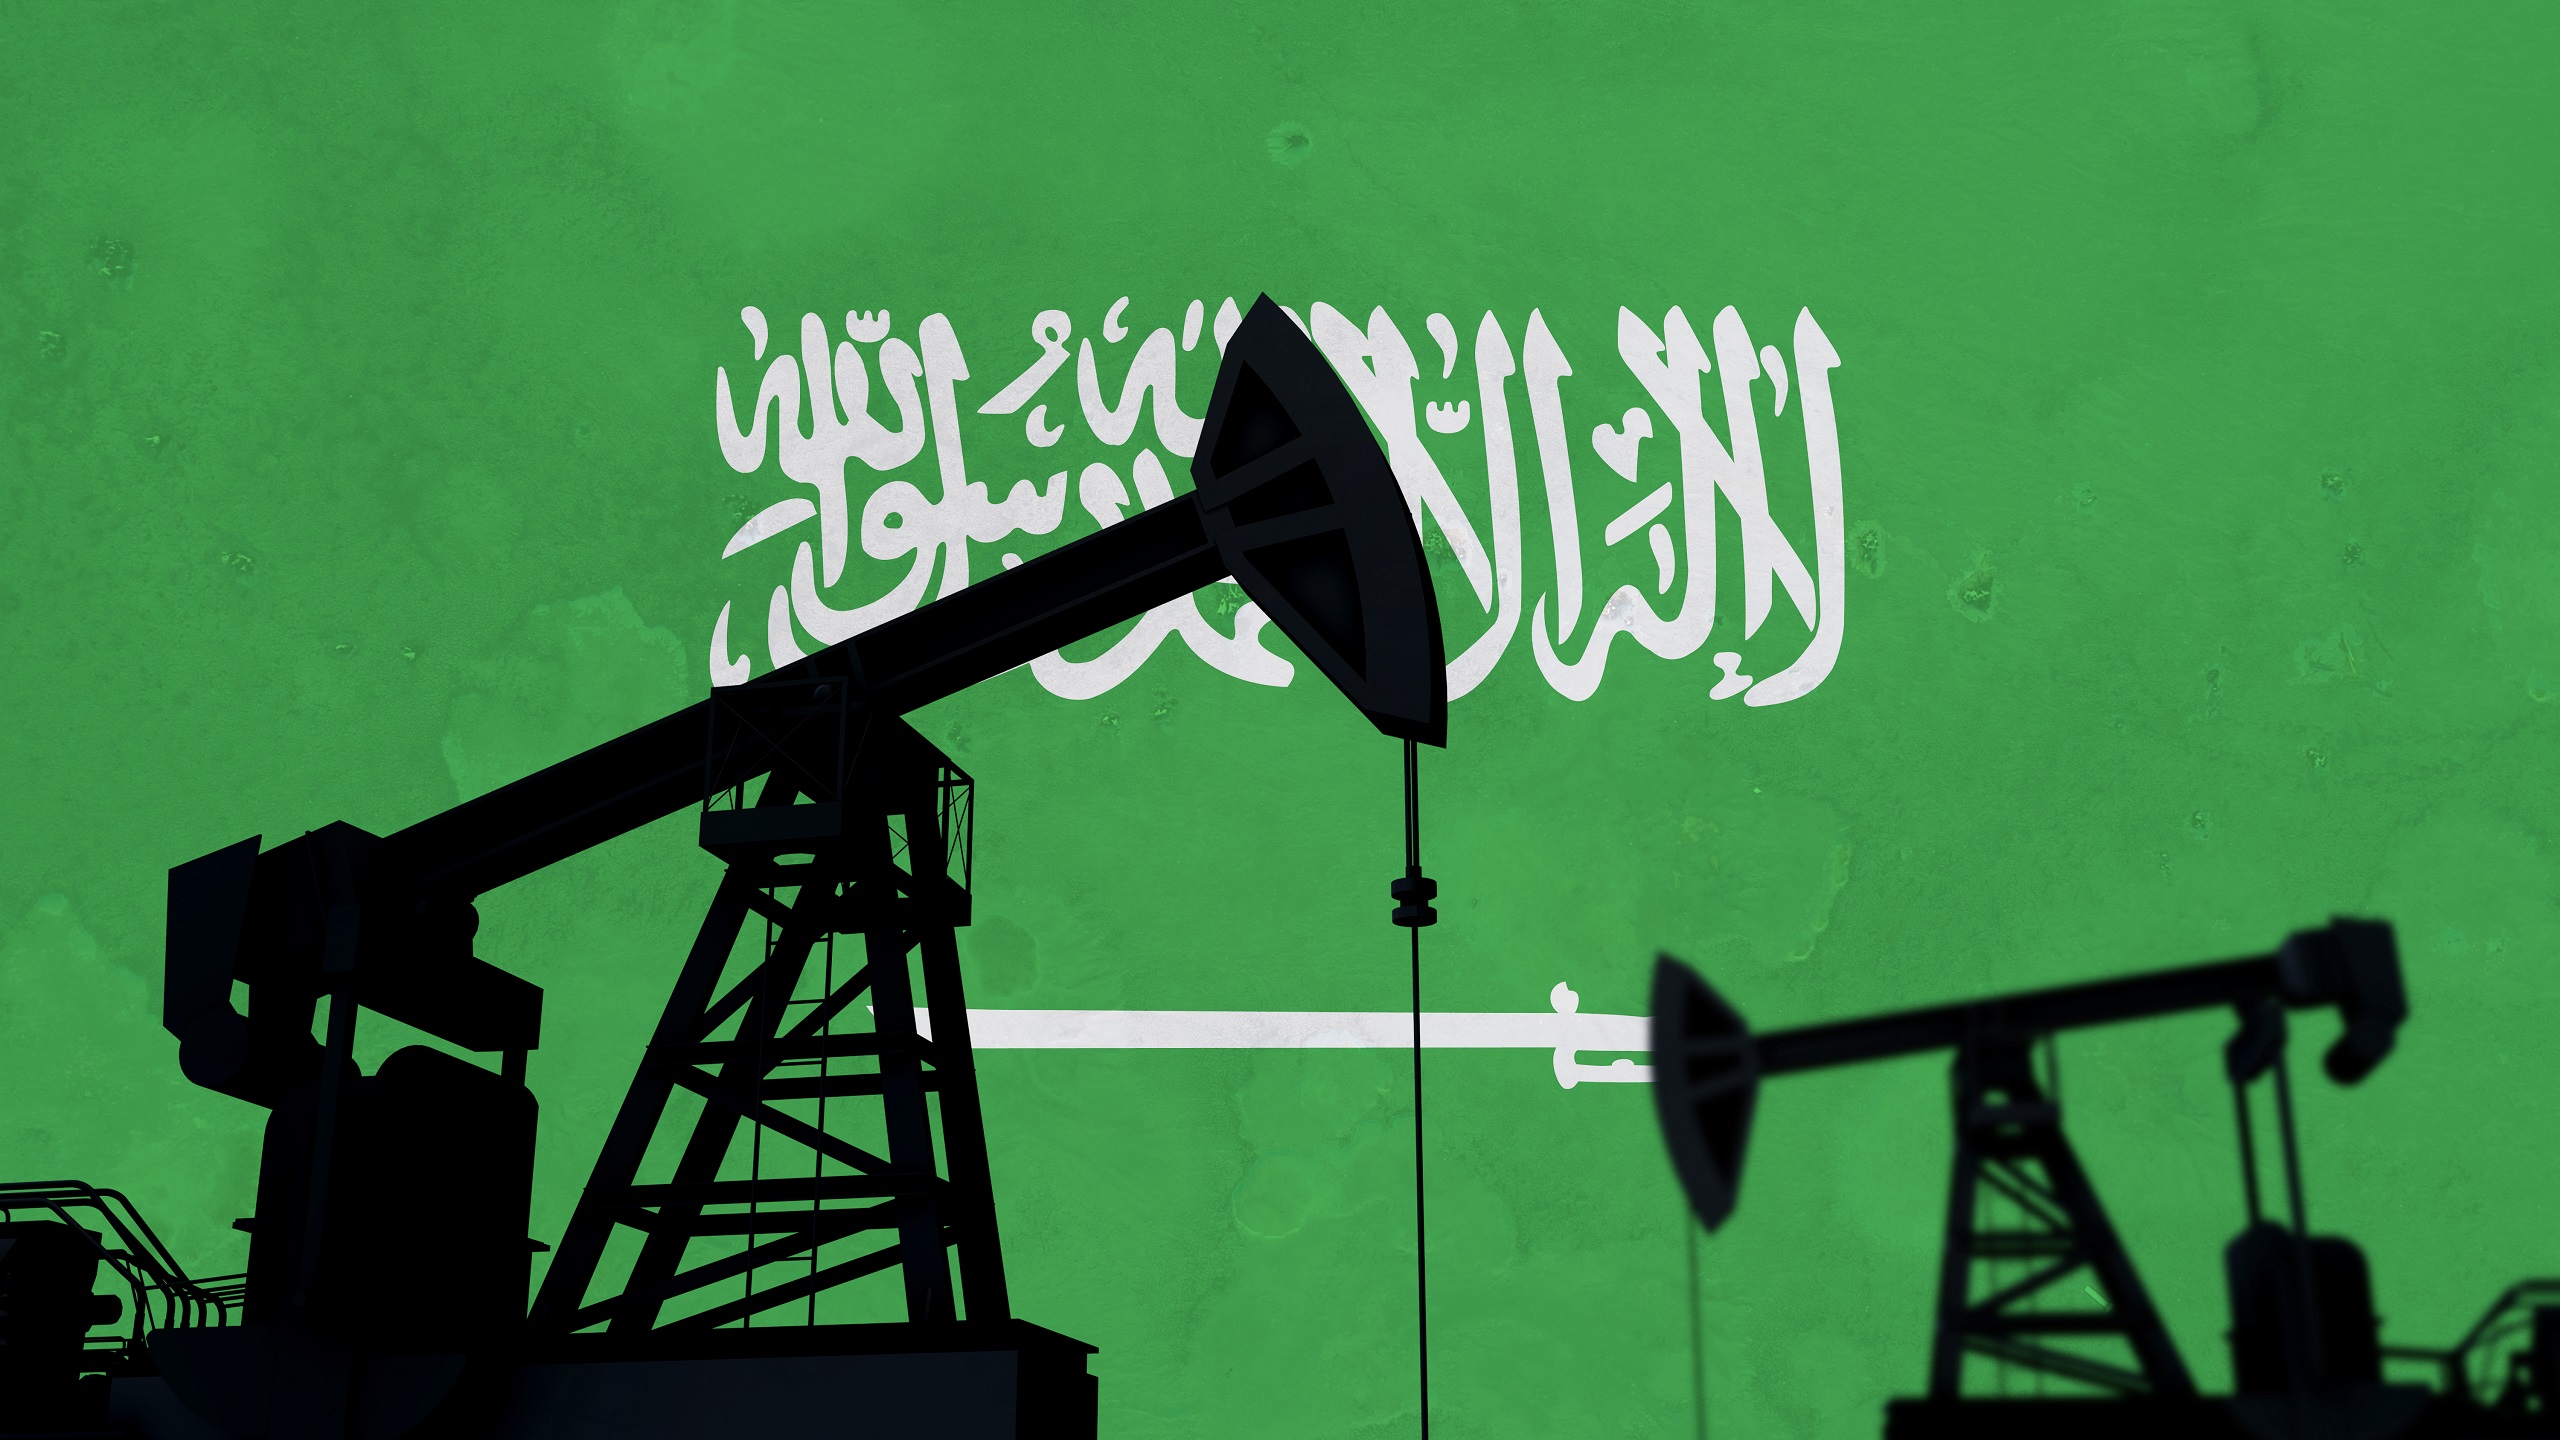 Saudi Arabia To Increase Oil Production to 13M Barrels per Day